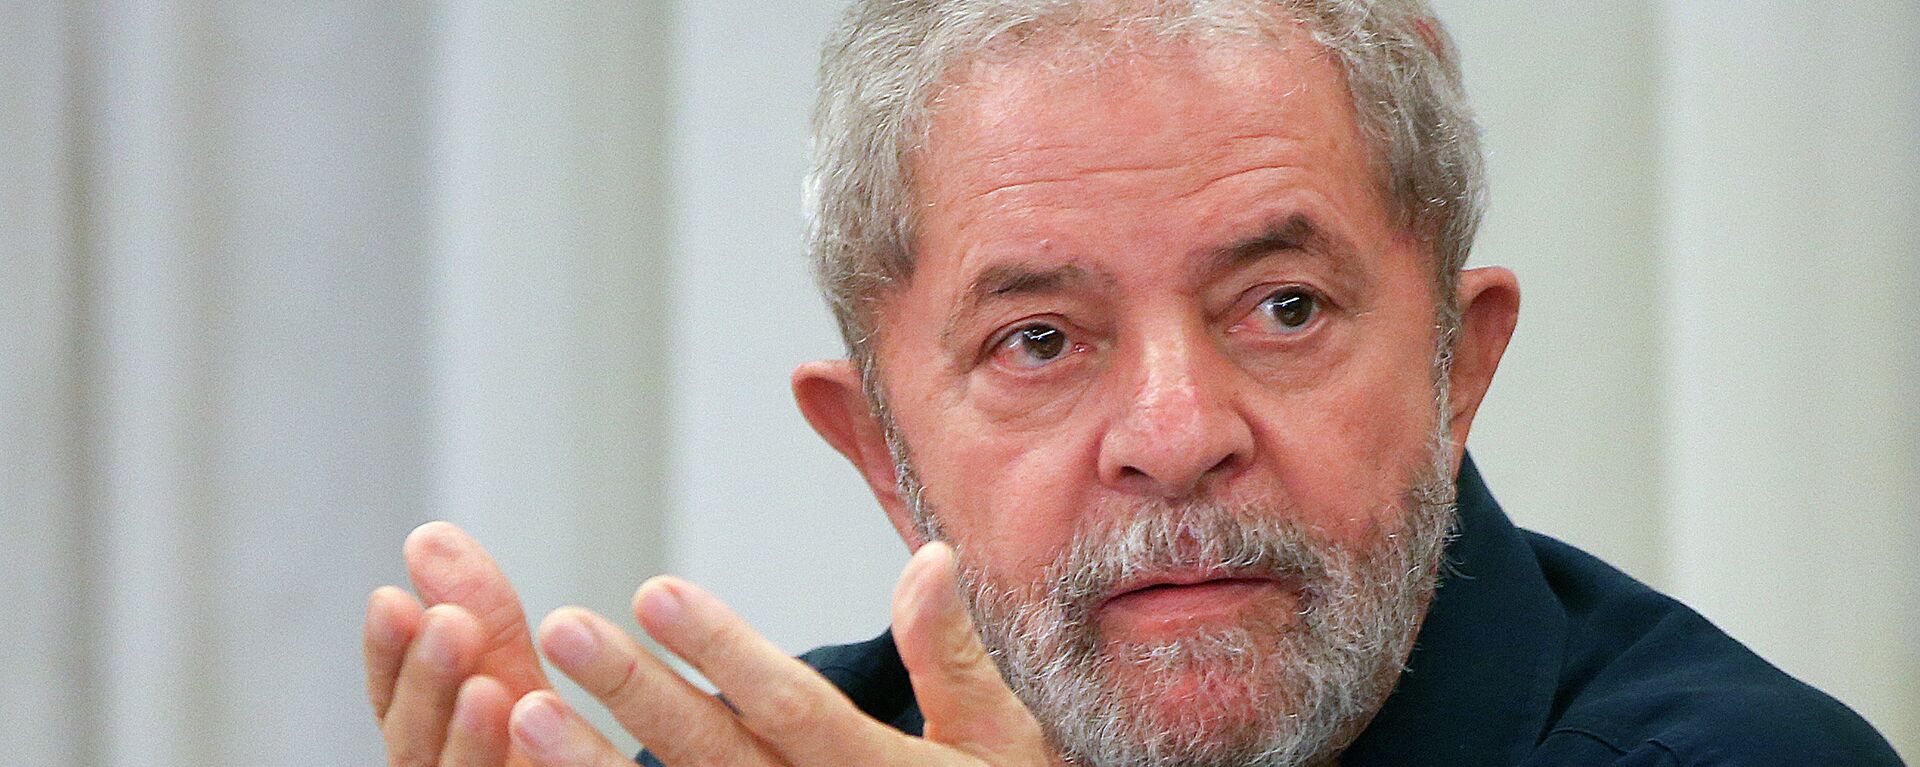 Luiz Inácio Lula da Silva, expresidente de Brasil - Sputnik Mundo, 1920, 22.04.2021